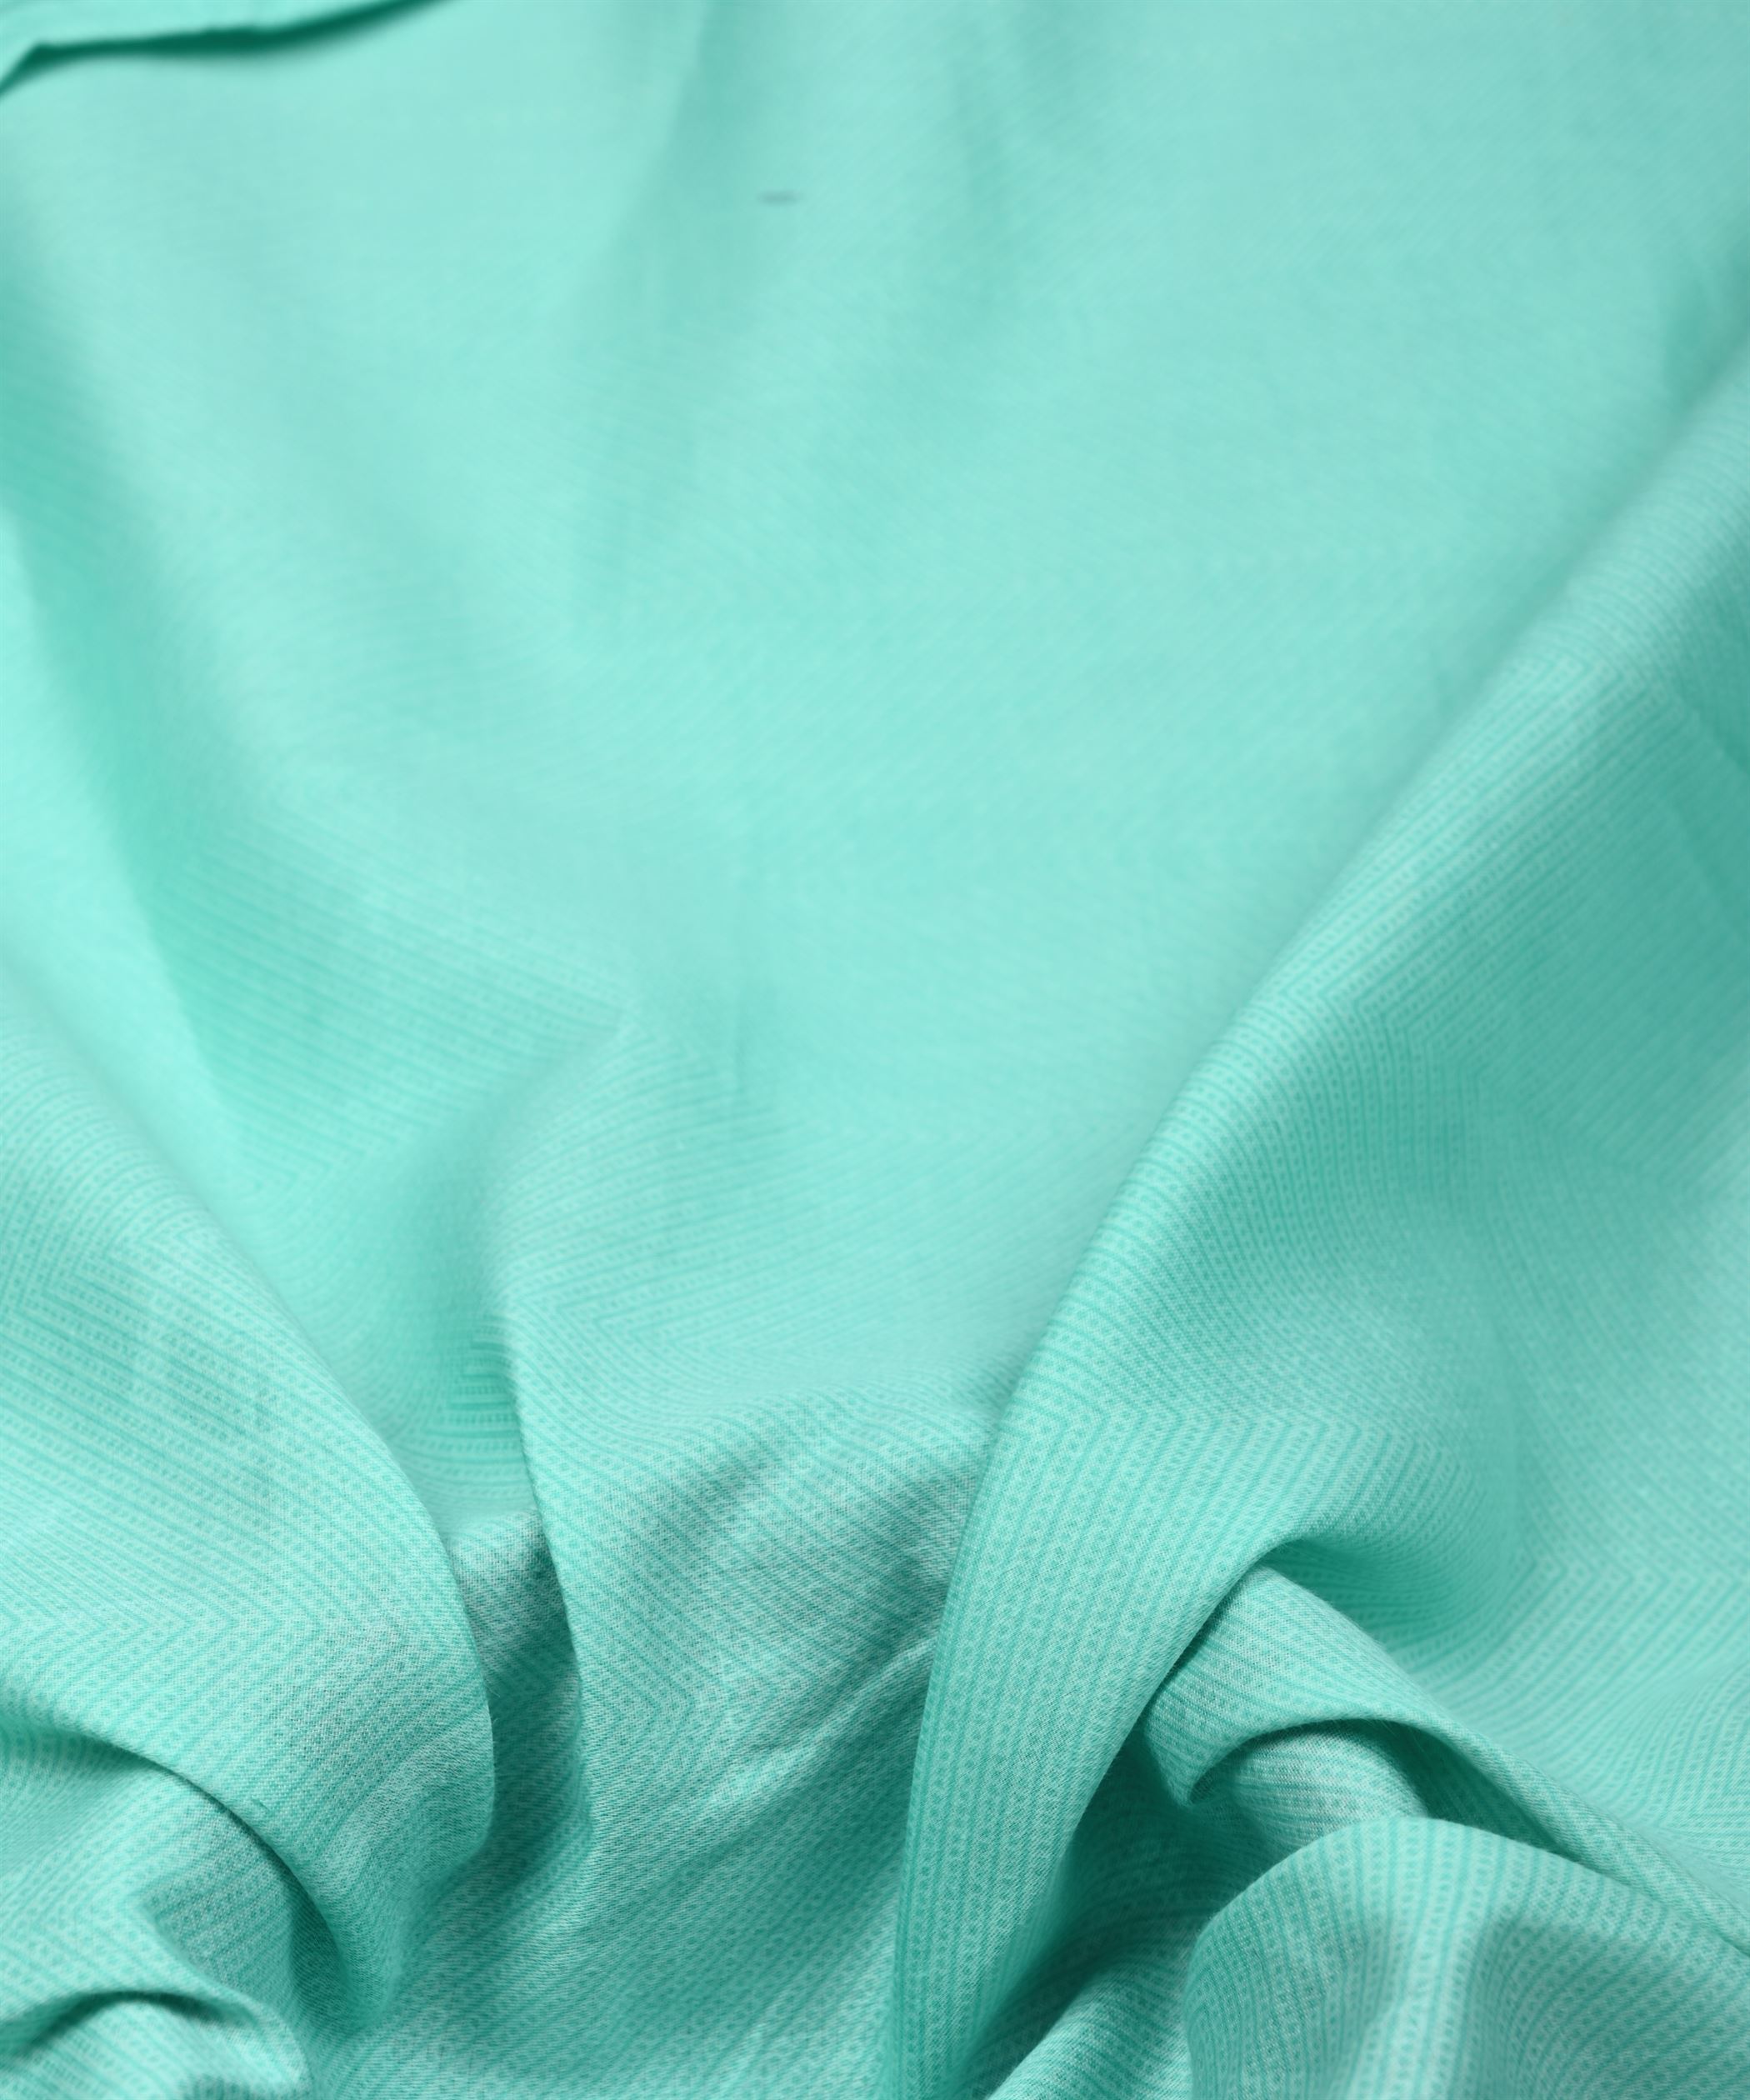 Sea Green Printed Cotton Satin fabric-3